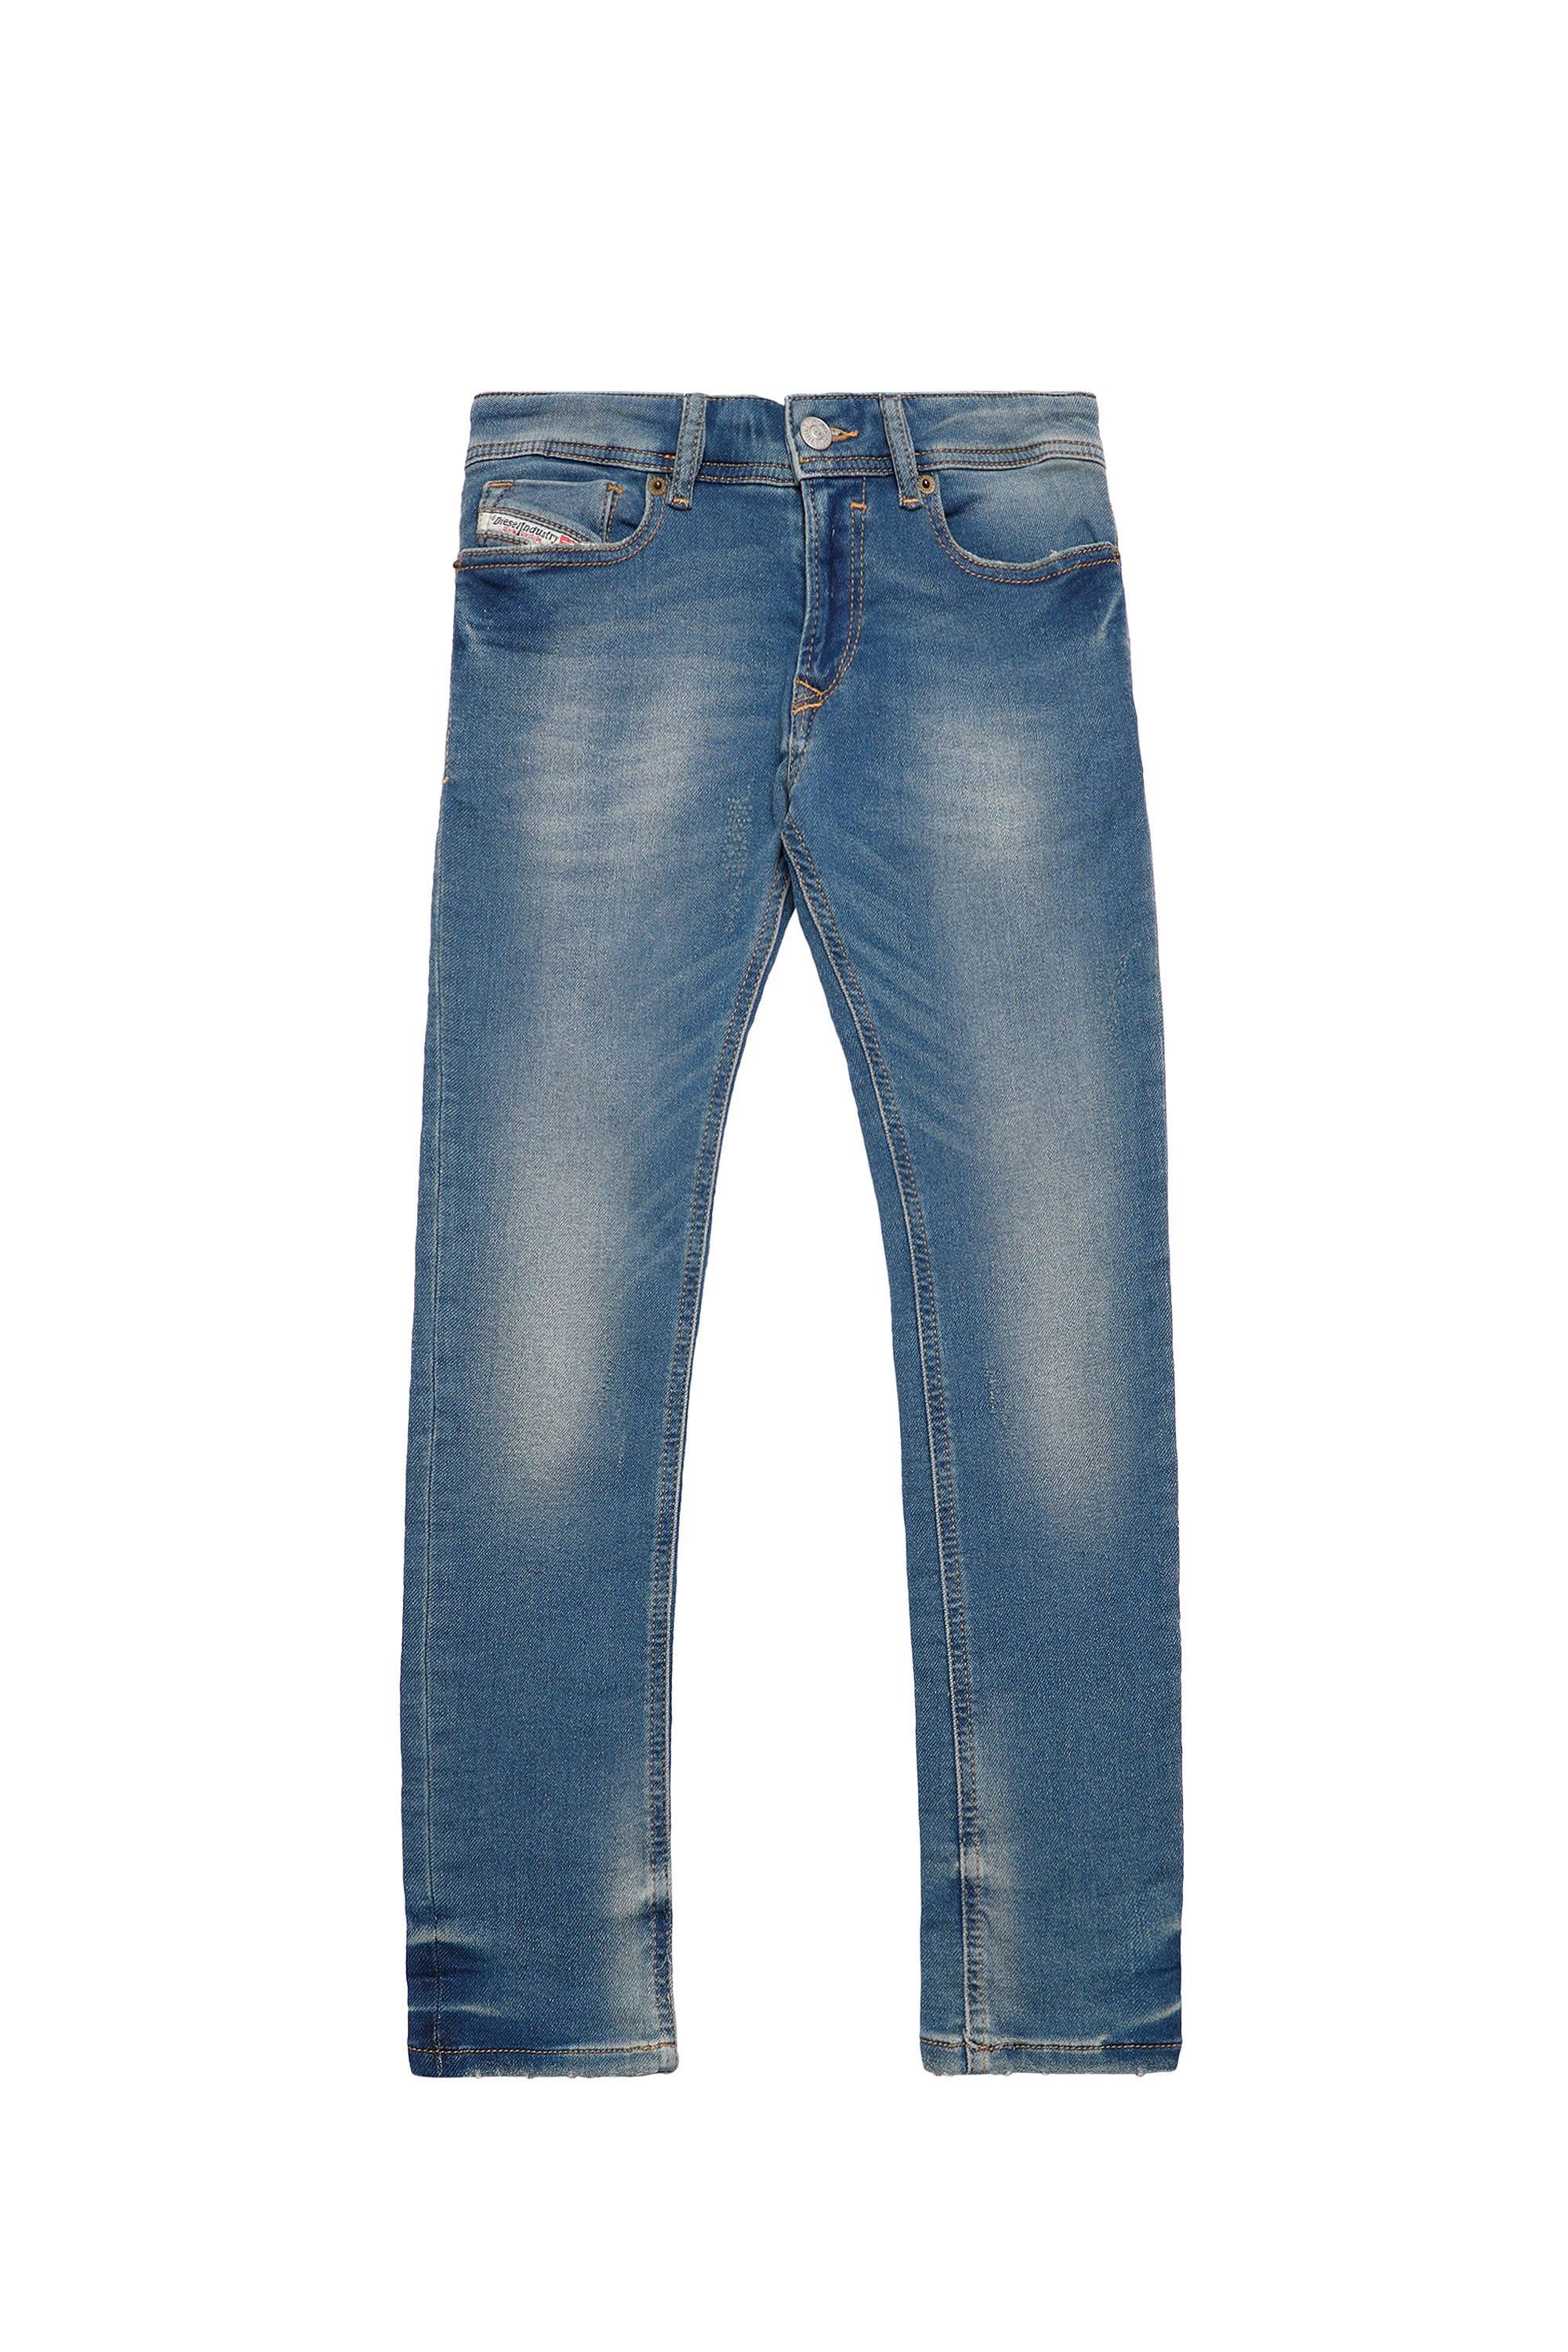 SLEENKER-J JOGGJEANS-N, Mittelblau - Jeans